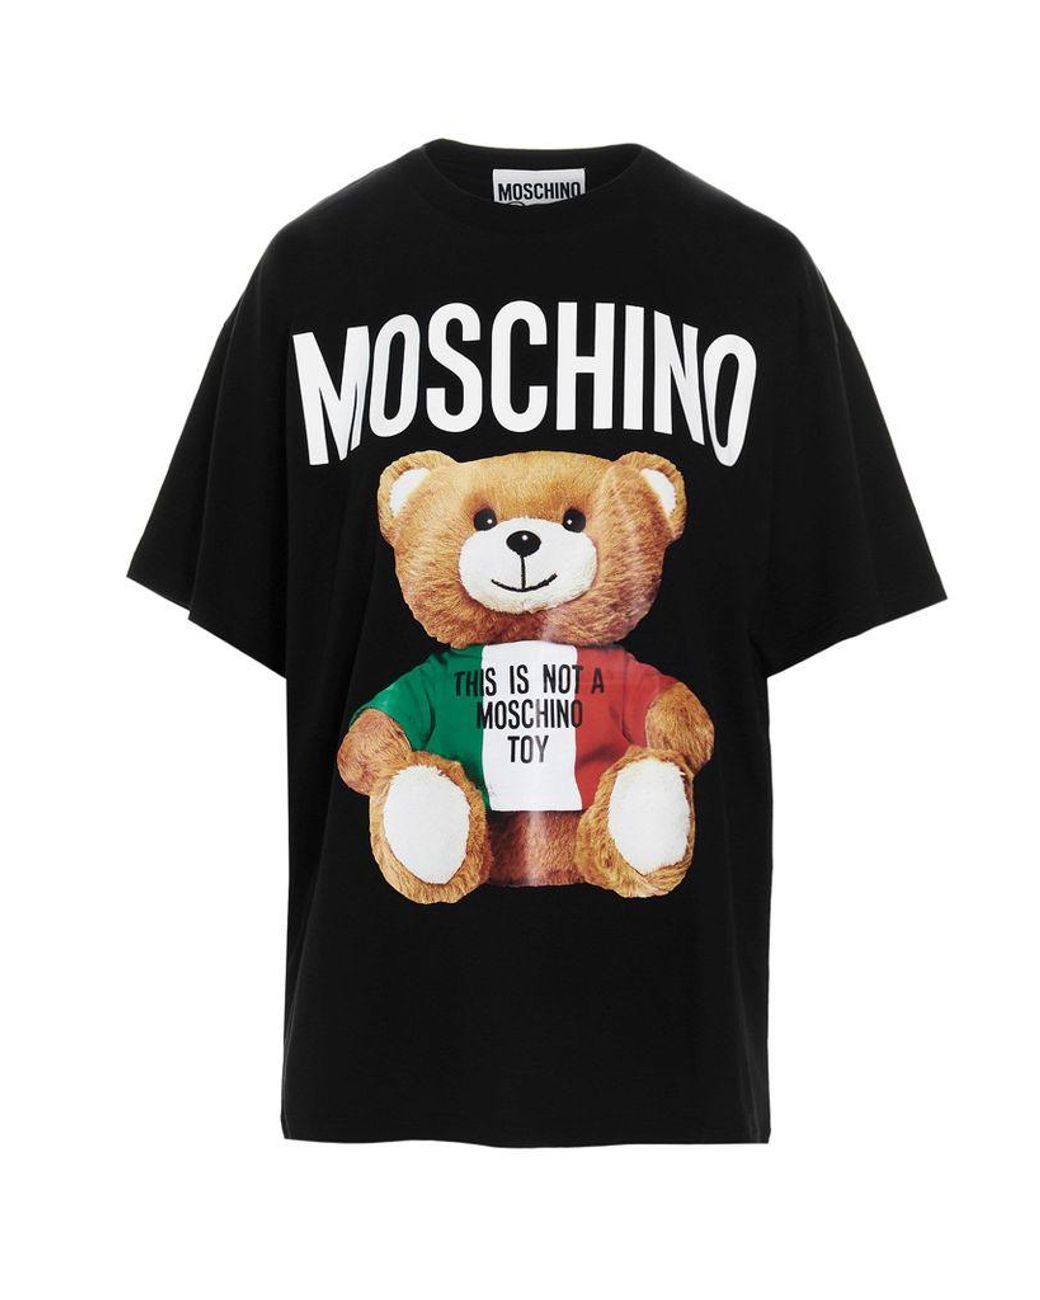 Moschino Women's V070805401555 Black Other Materials T-shirt - Lyst